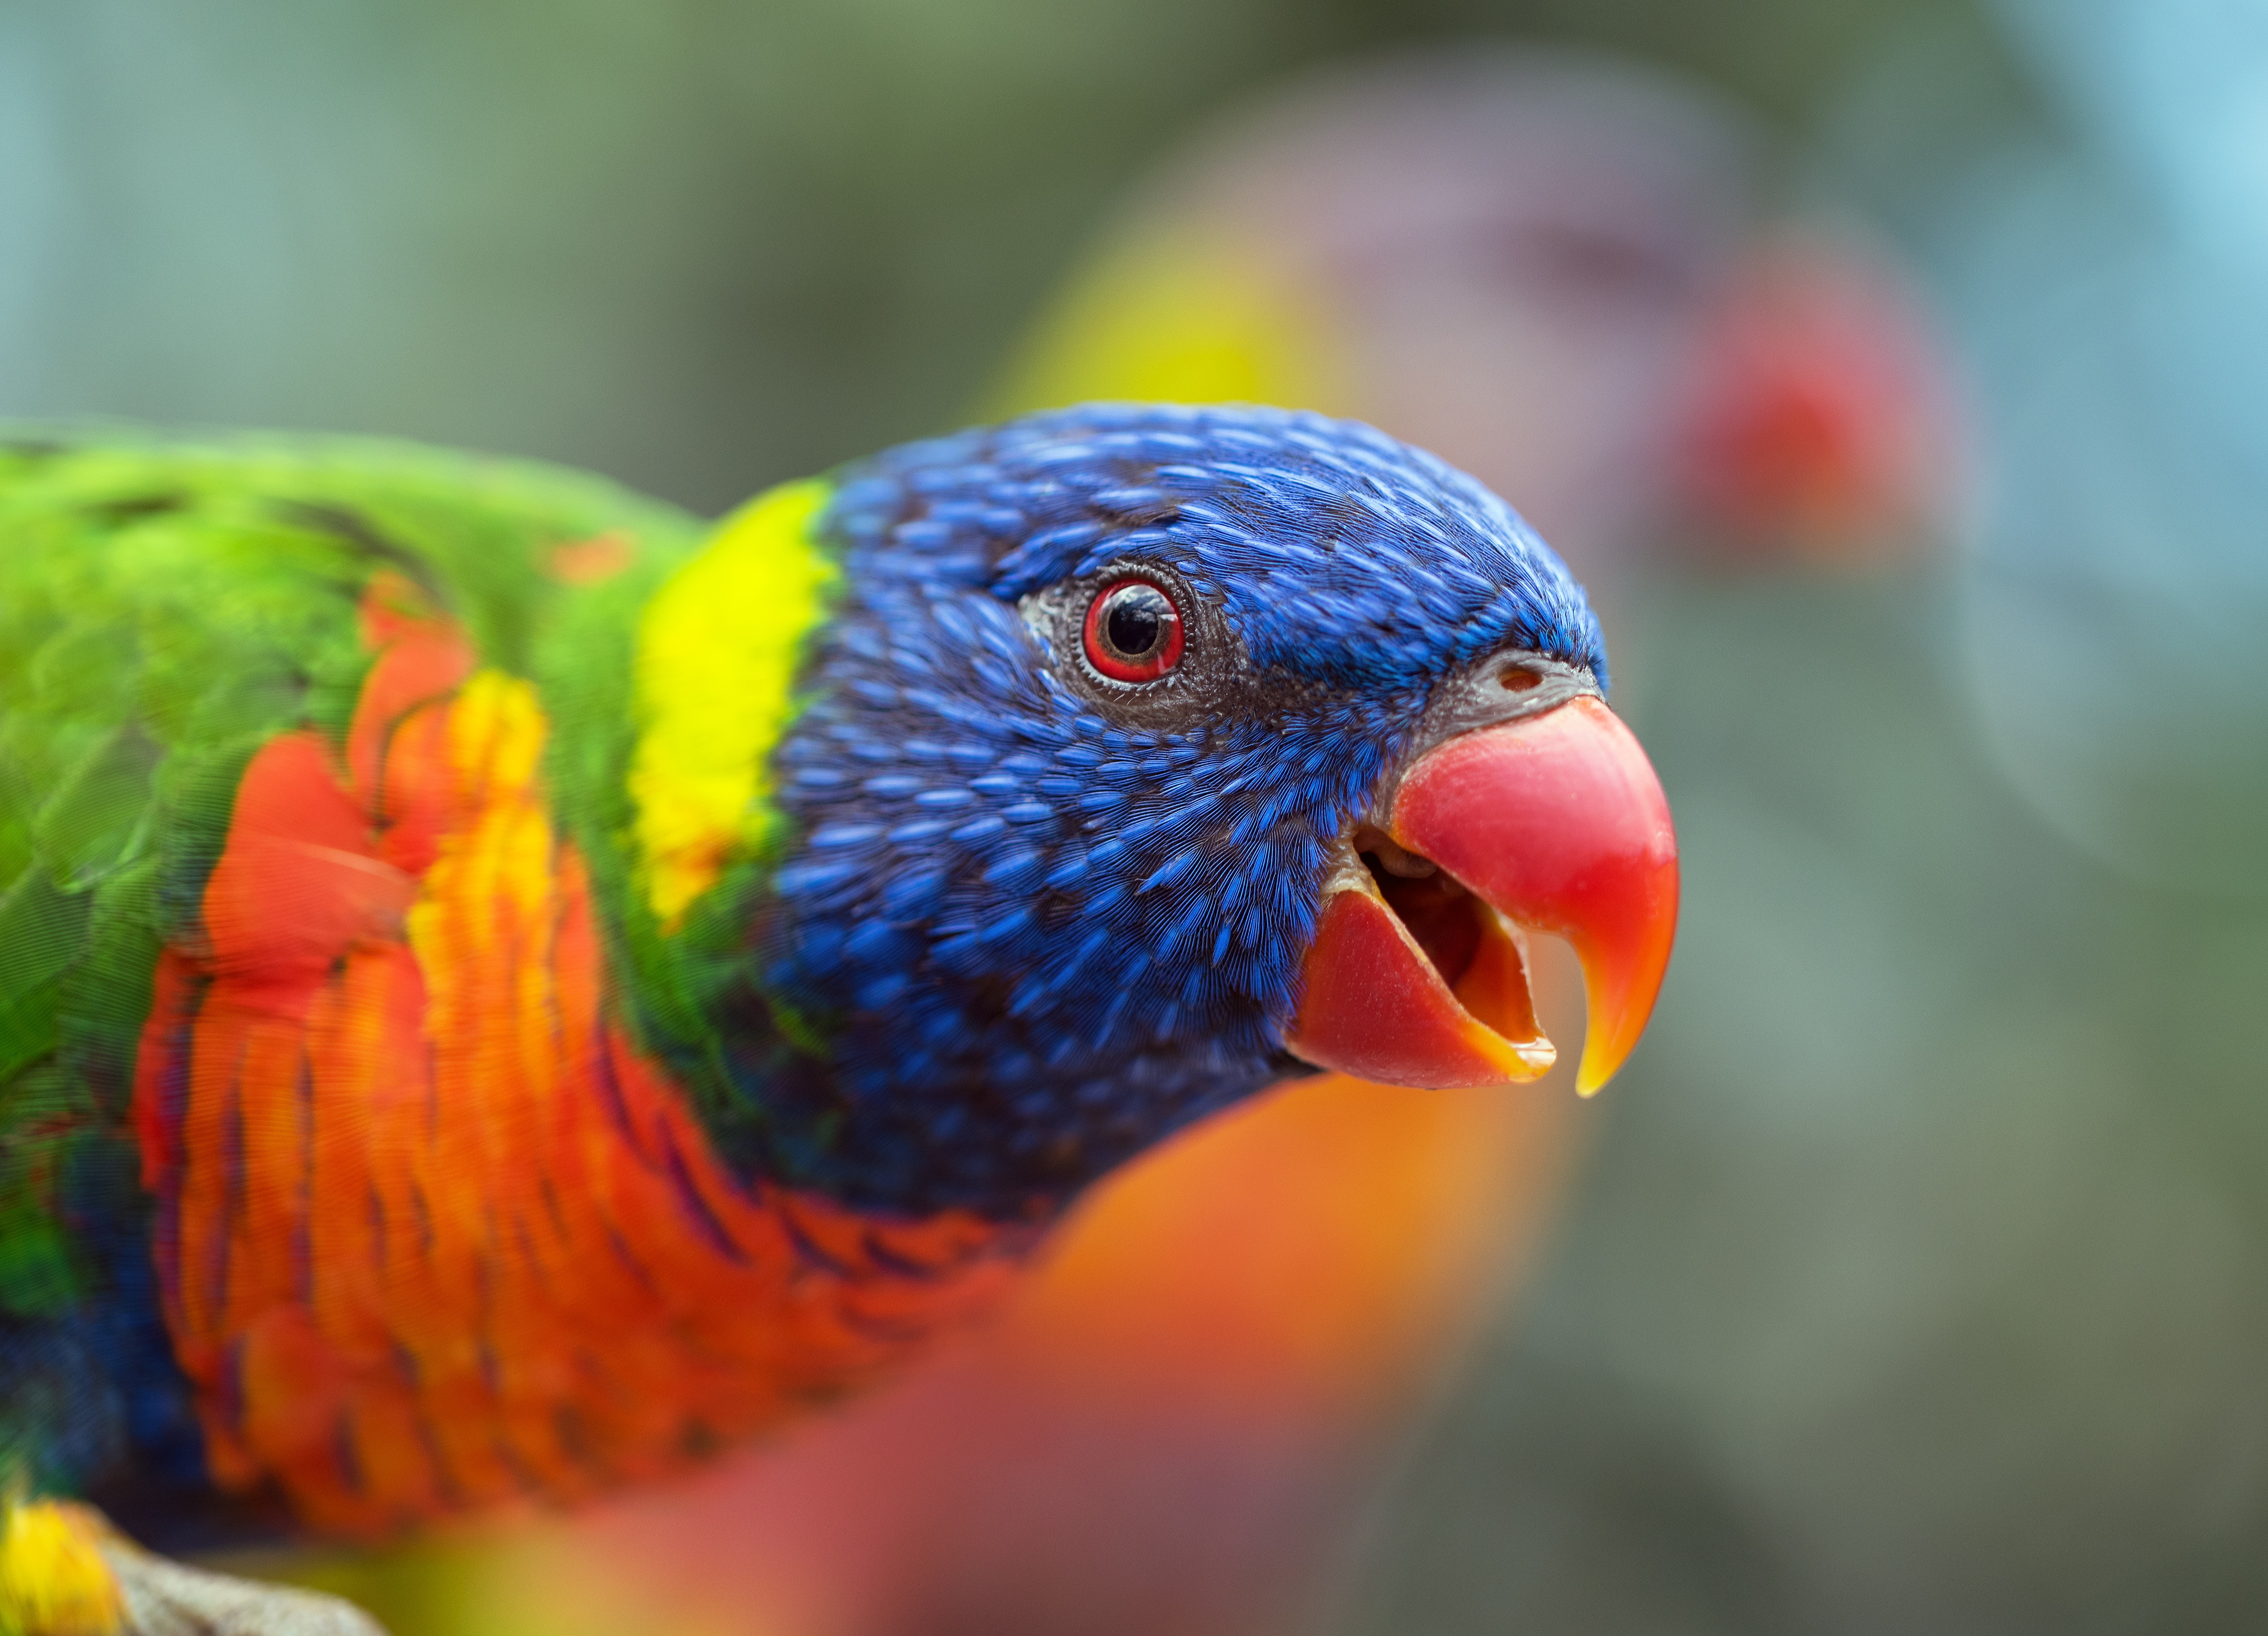 laurie, lori, animals, parrots, rainbow, bird, beak, iridescent